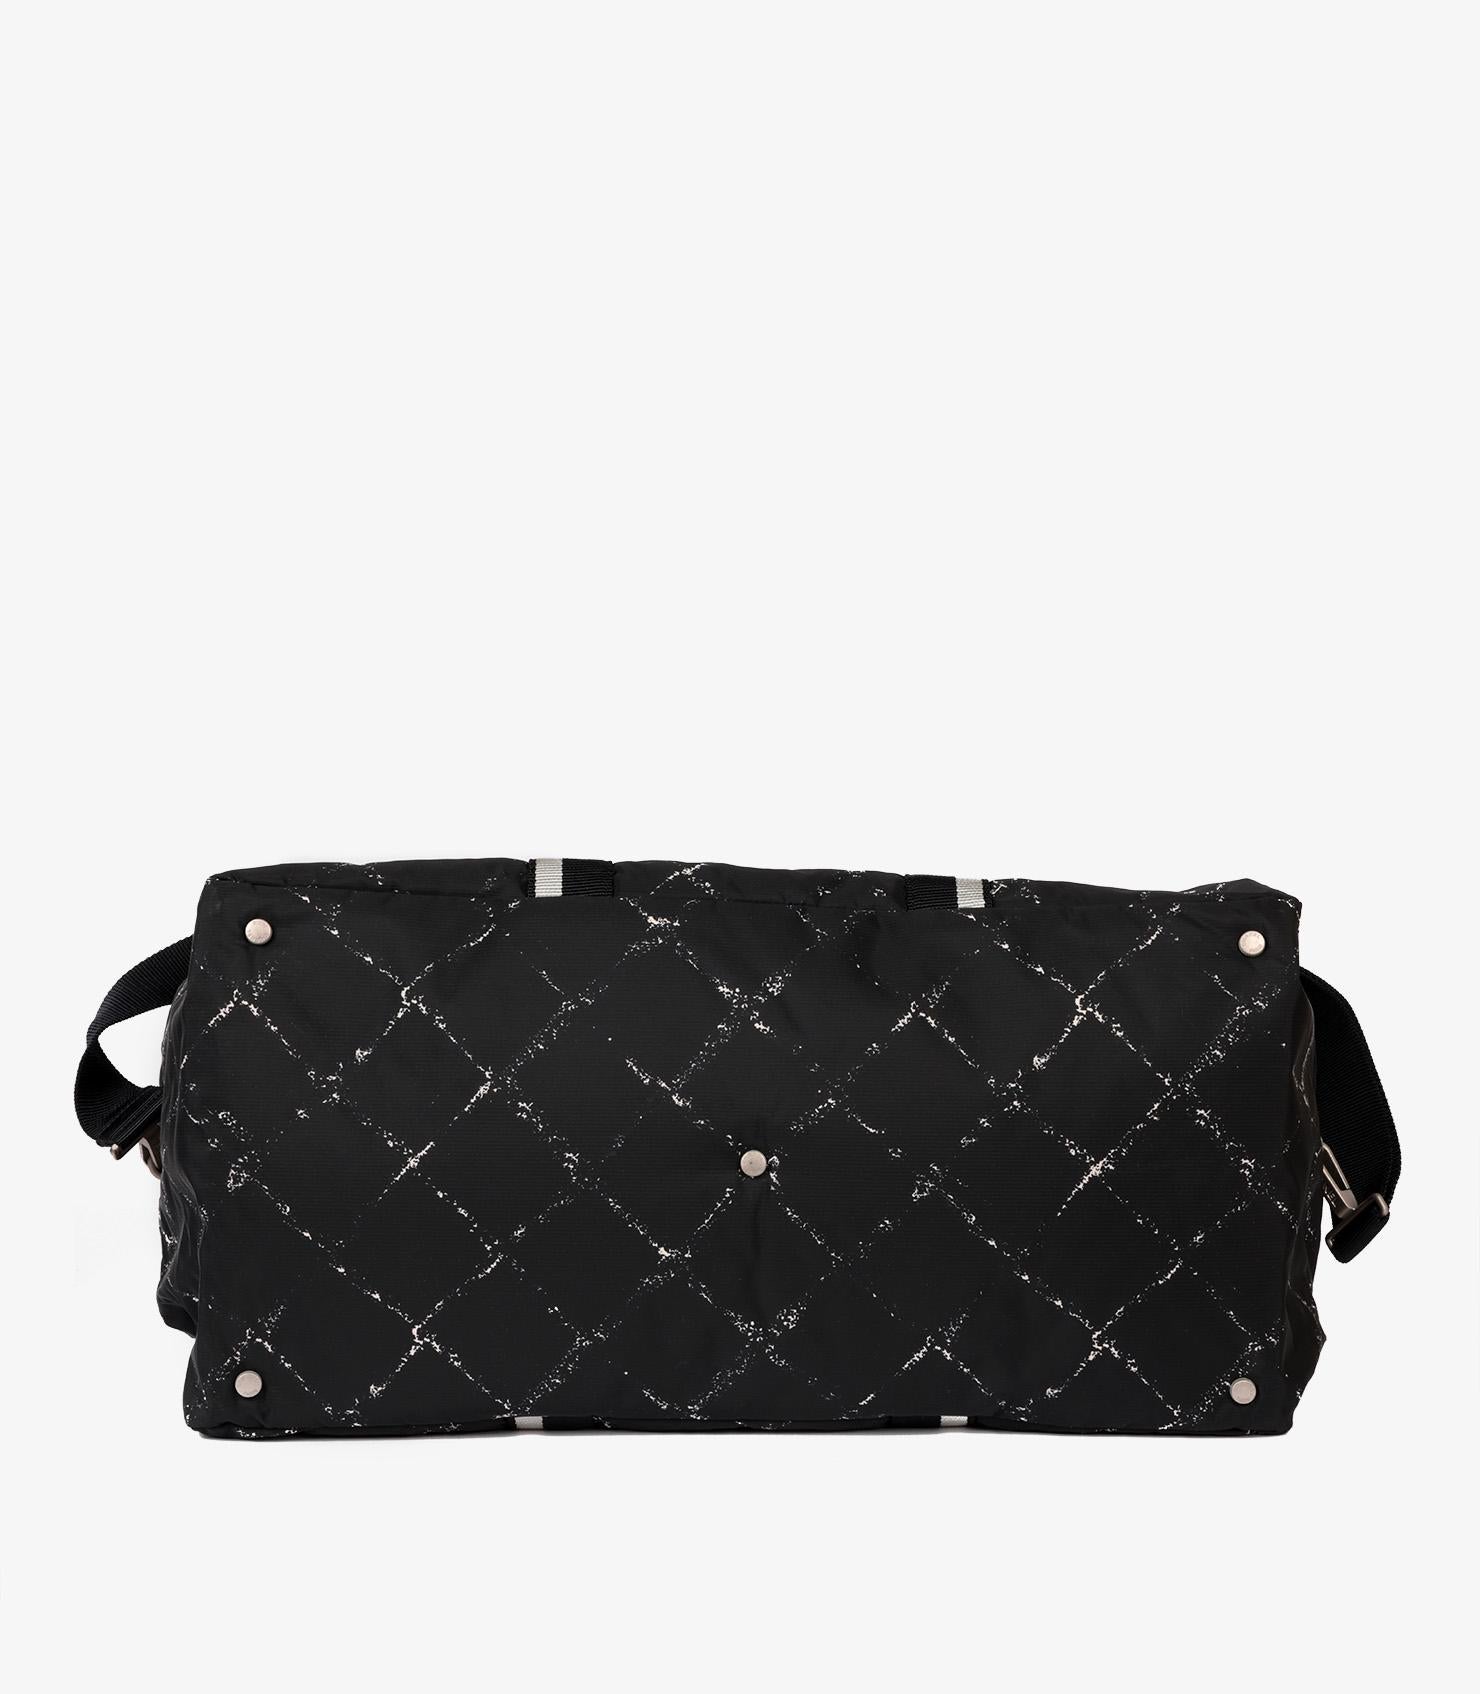 Chanel Black & White Nylon Travel Line Duffle Bag 5